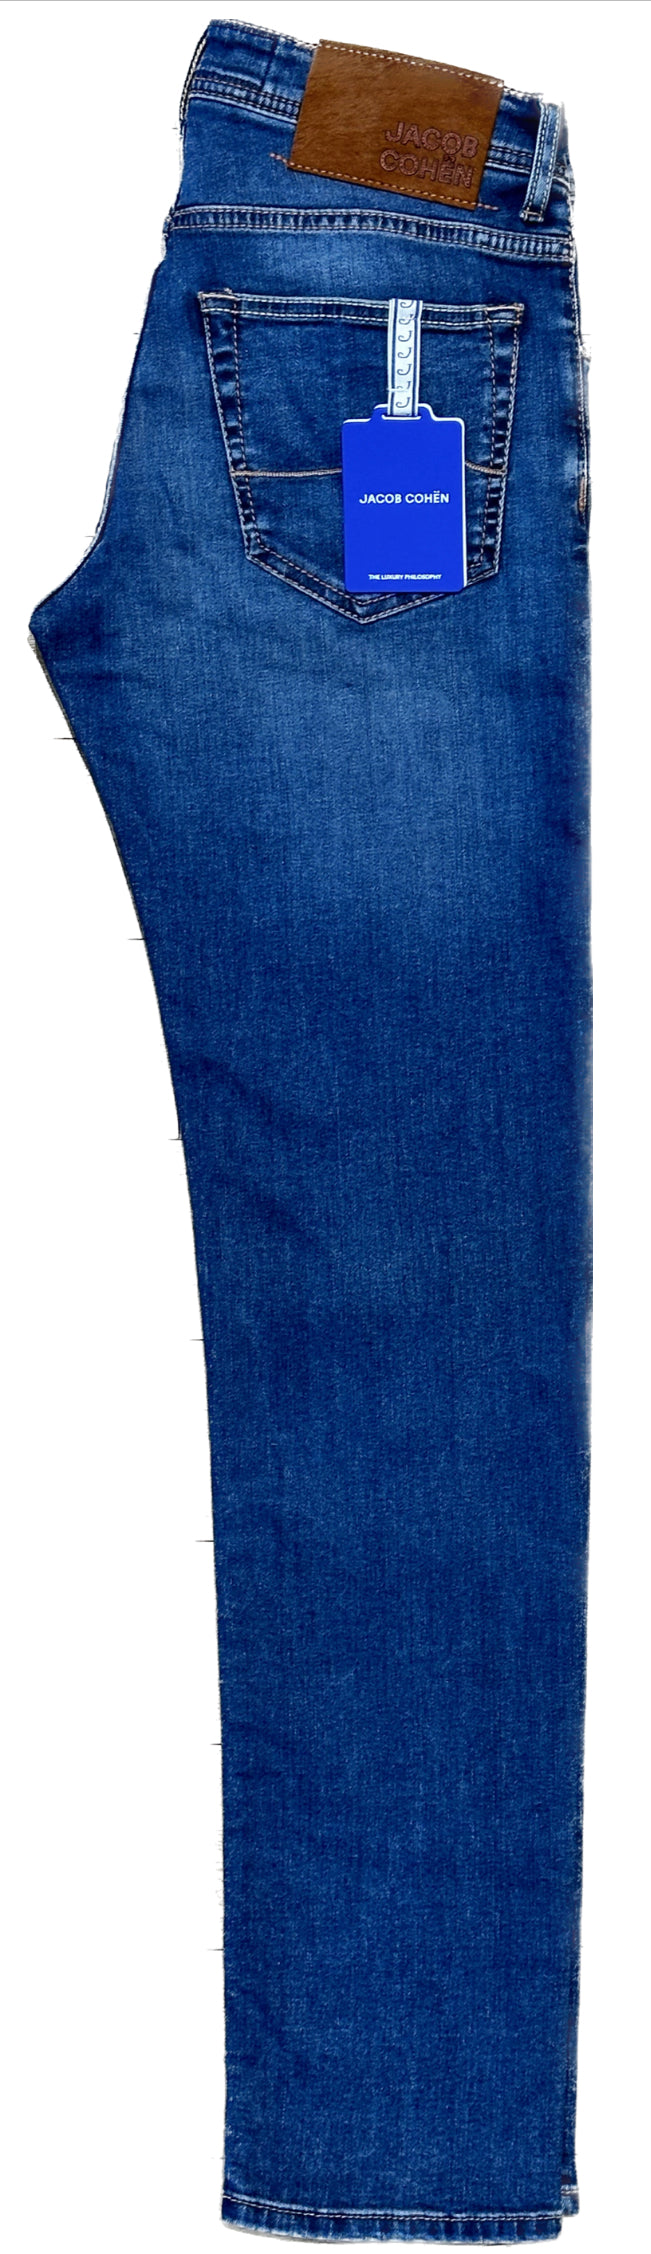 Jacob Cohën jeans blauw 550D